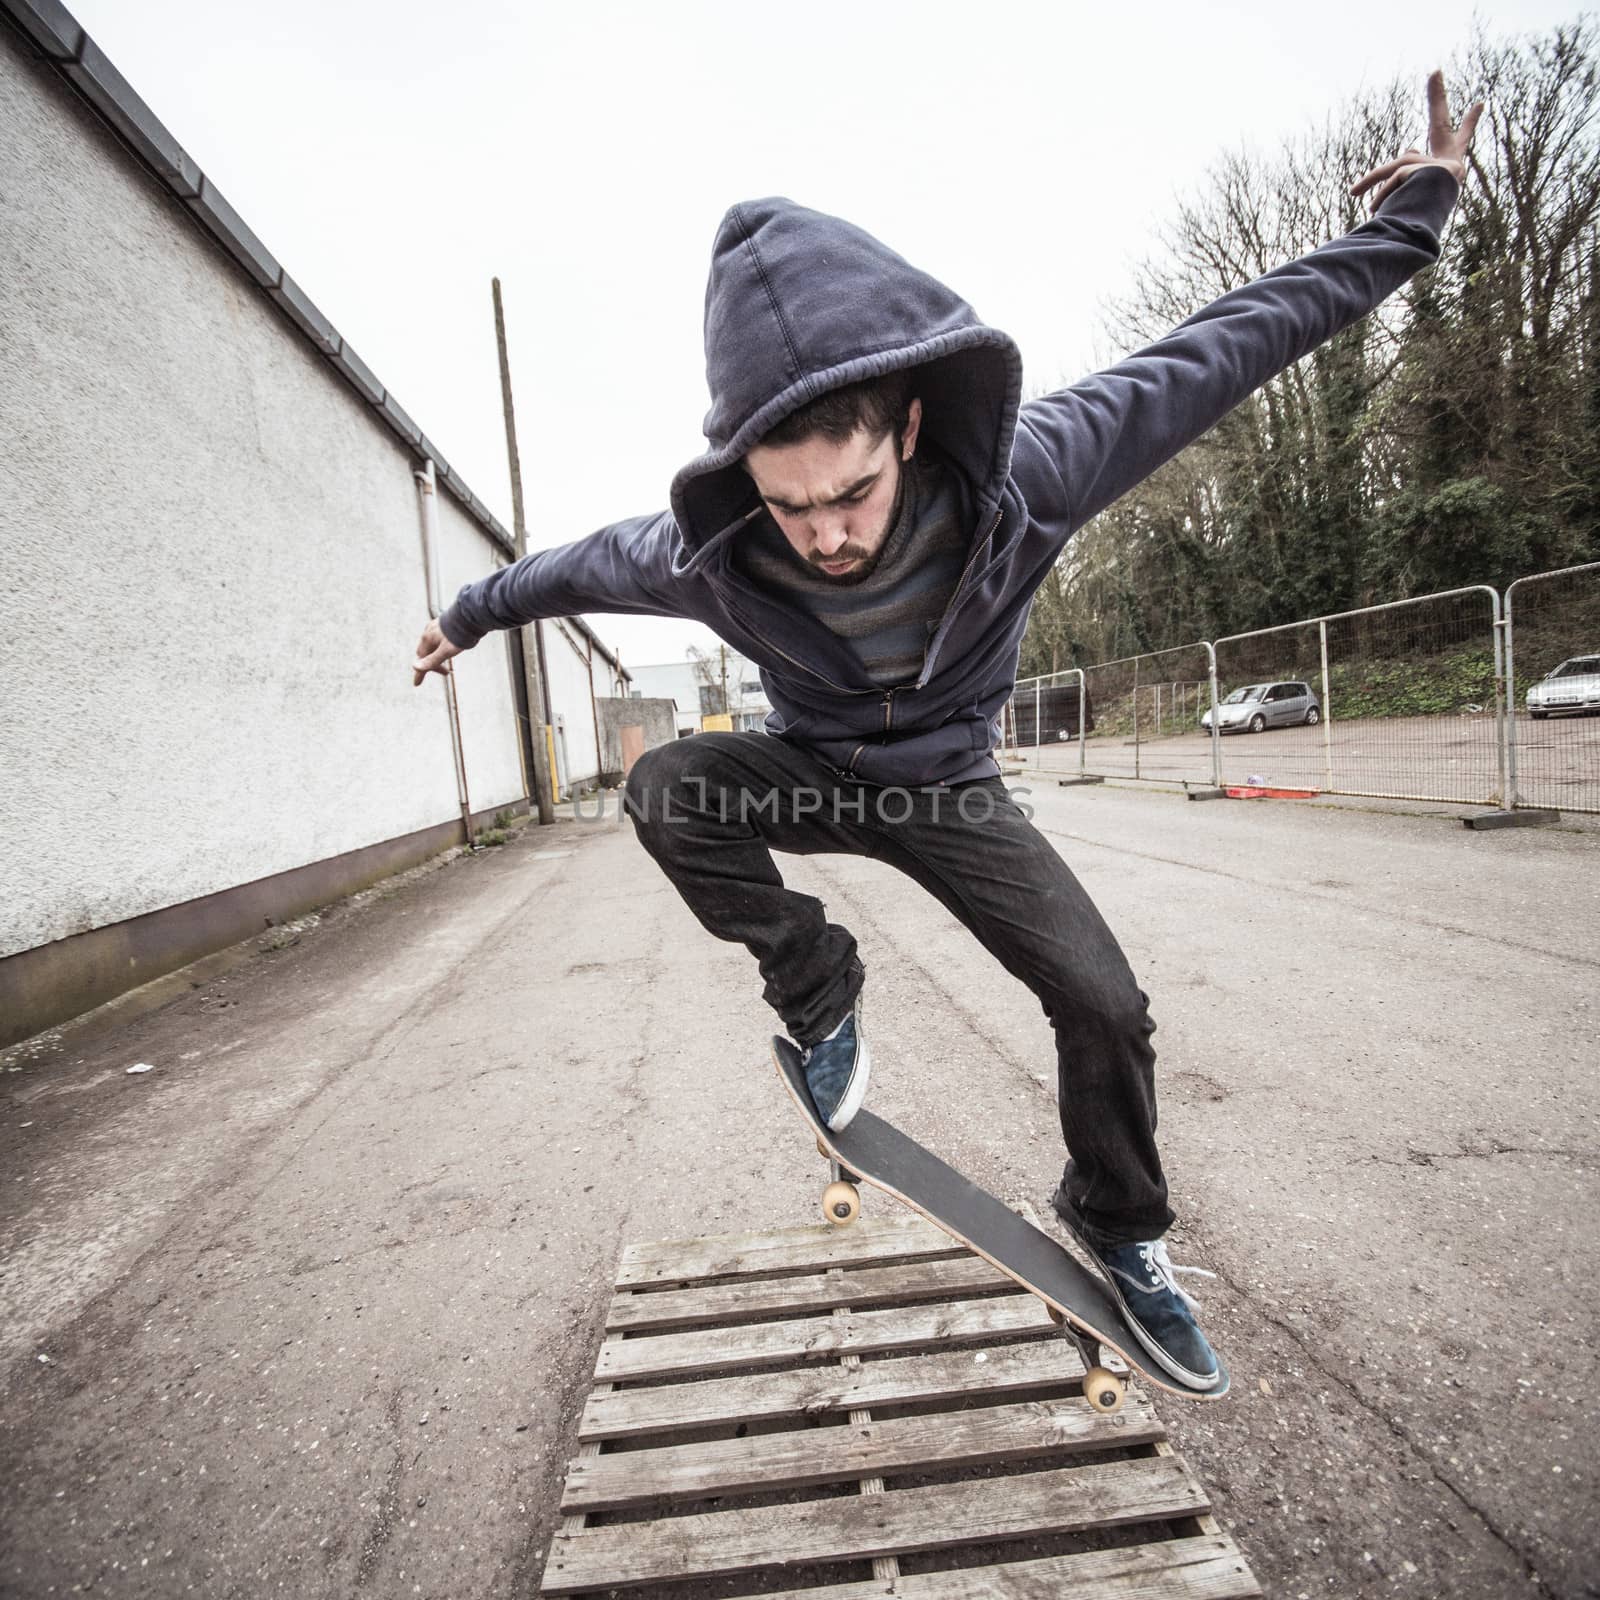 Skater doing ollie over wooden crate by Wavebreakmedia